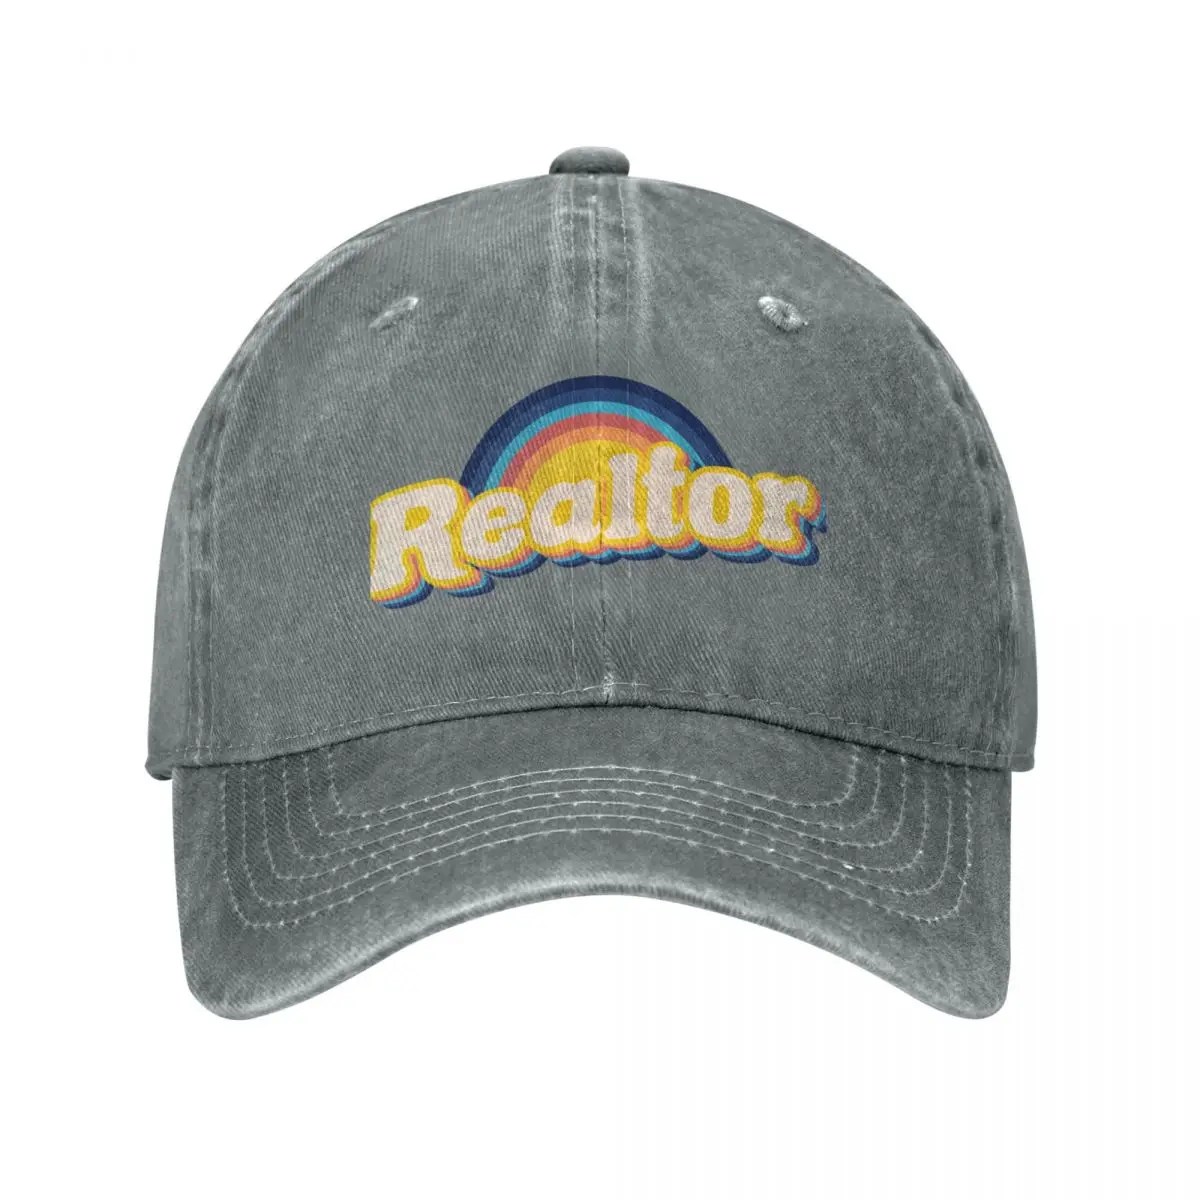 

Realtor retro vibeCap Cowboy Hat cap golf Bobble hat Beach outing sun hats for women Men's